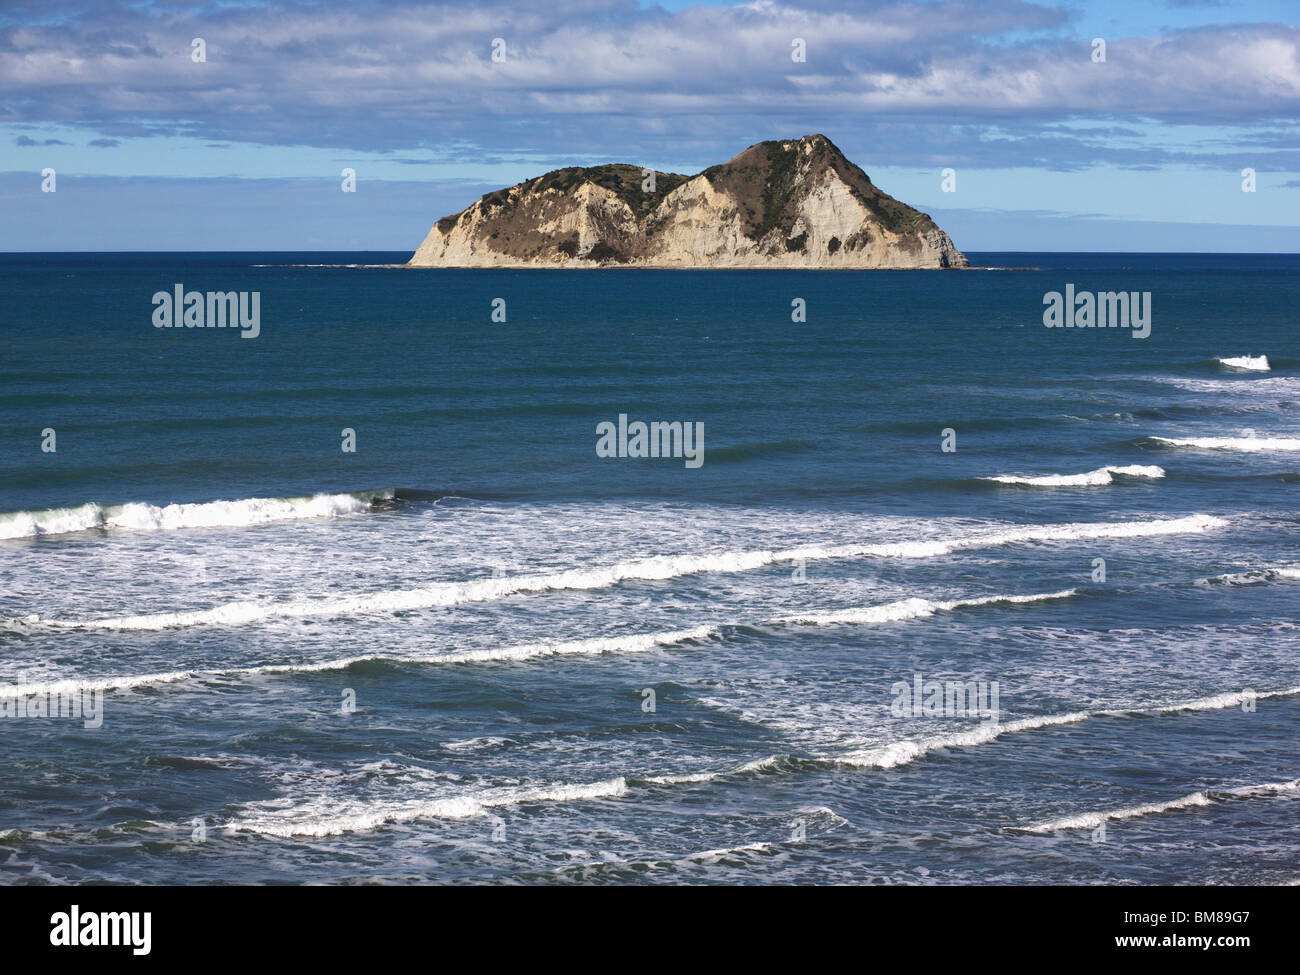 Whangaokeno Island off the East Cape of New Zealand's North Island Stock Photo